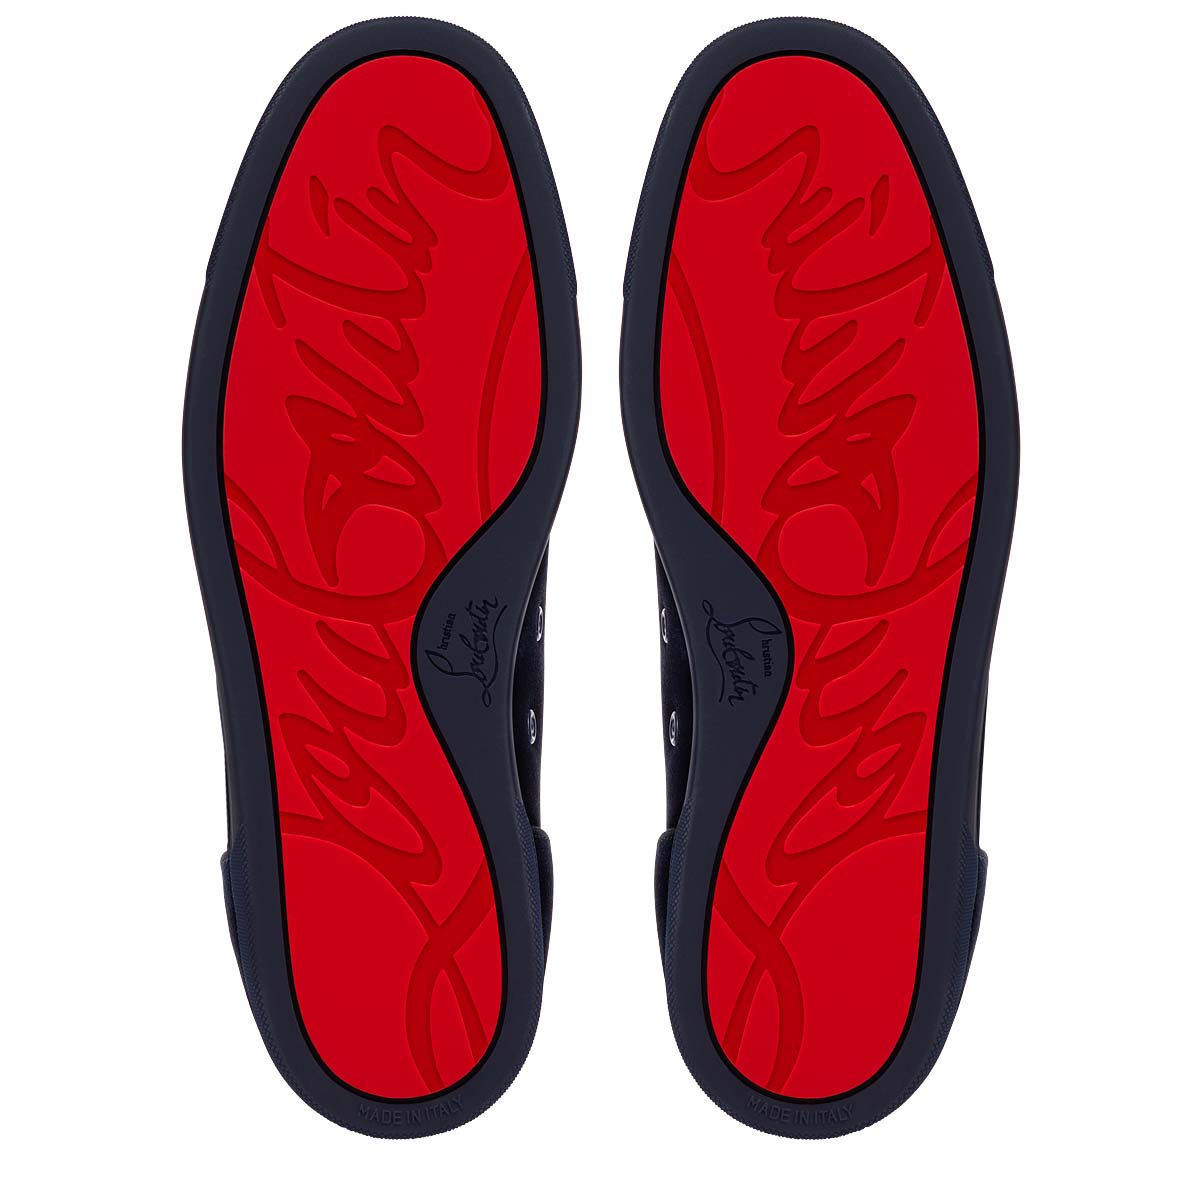 Christian Louboutin Men's Louis Junior Orlato Spike Sneakers - Version Navy - Size 9.5